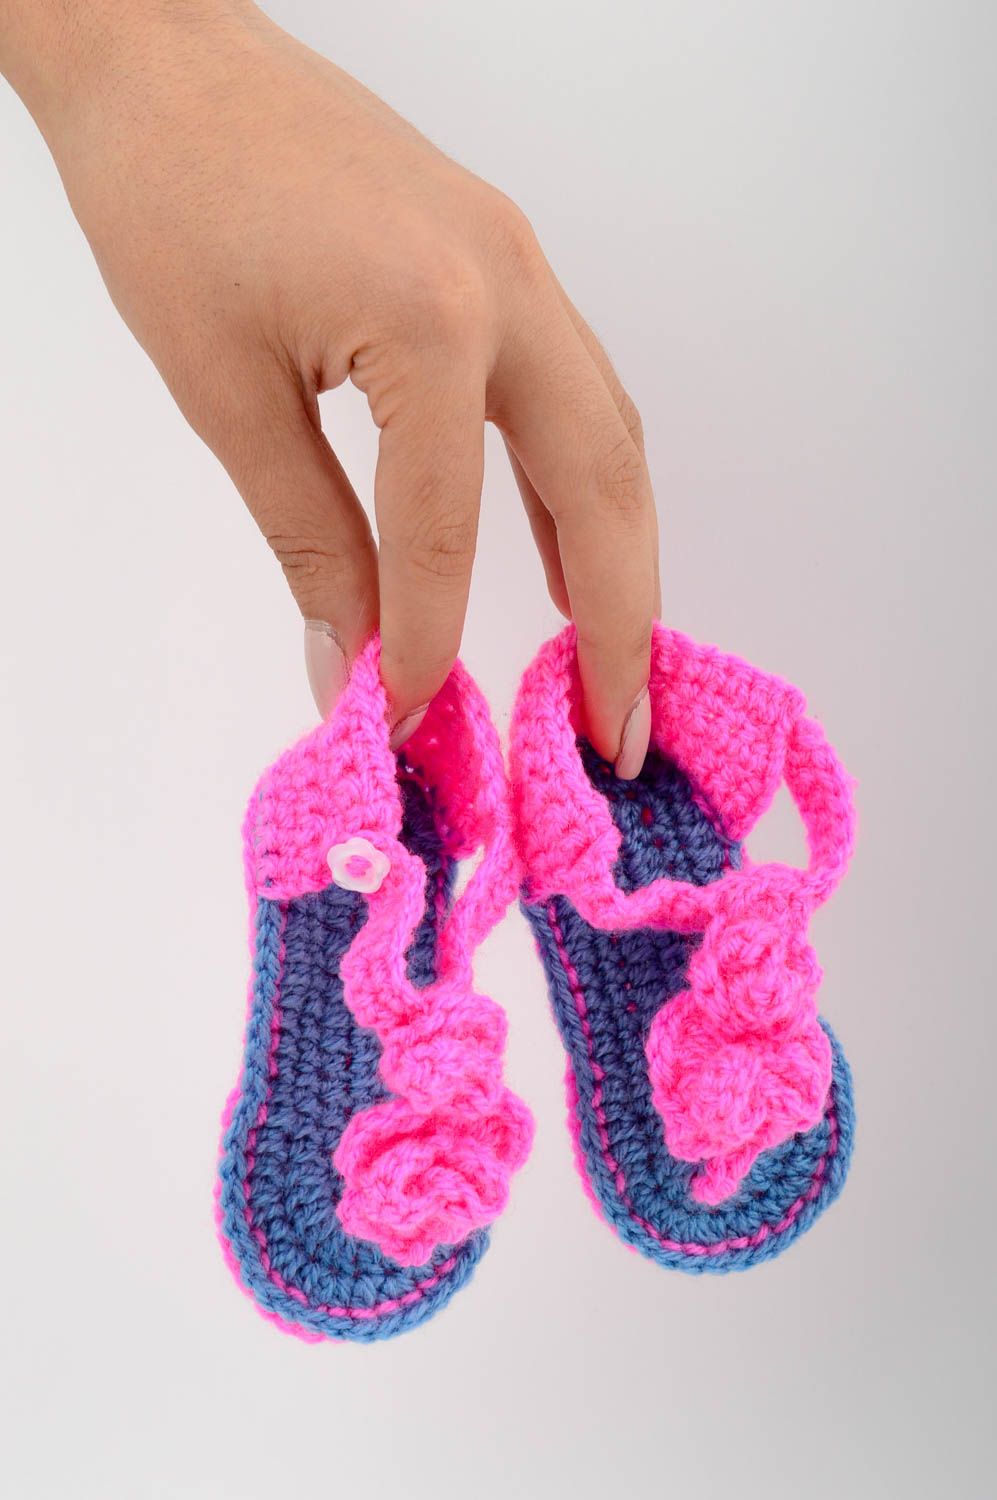 Handmade baby shoes baby socks crochet baby booties goods for children photo 2